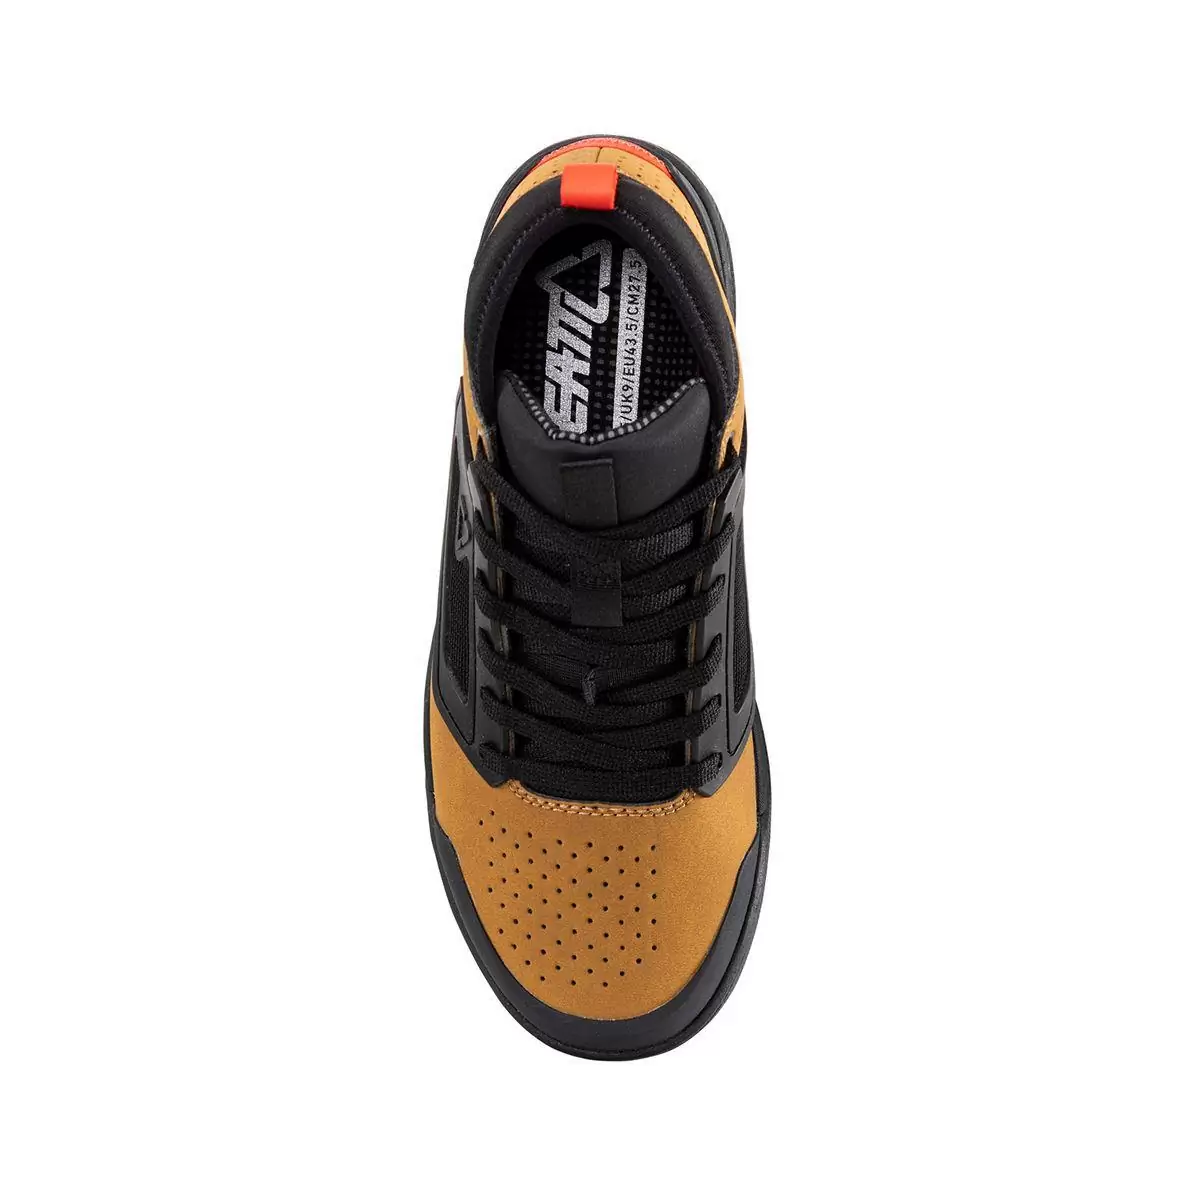 MTB Flat 3.0 Shoes Brown/Black Size 43.5 #3